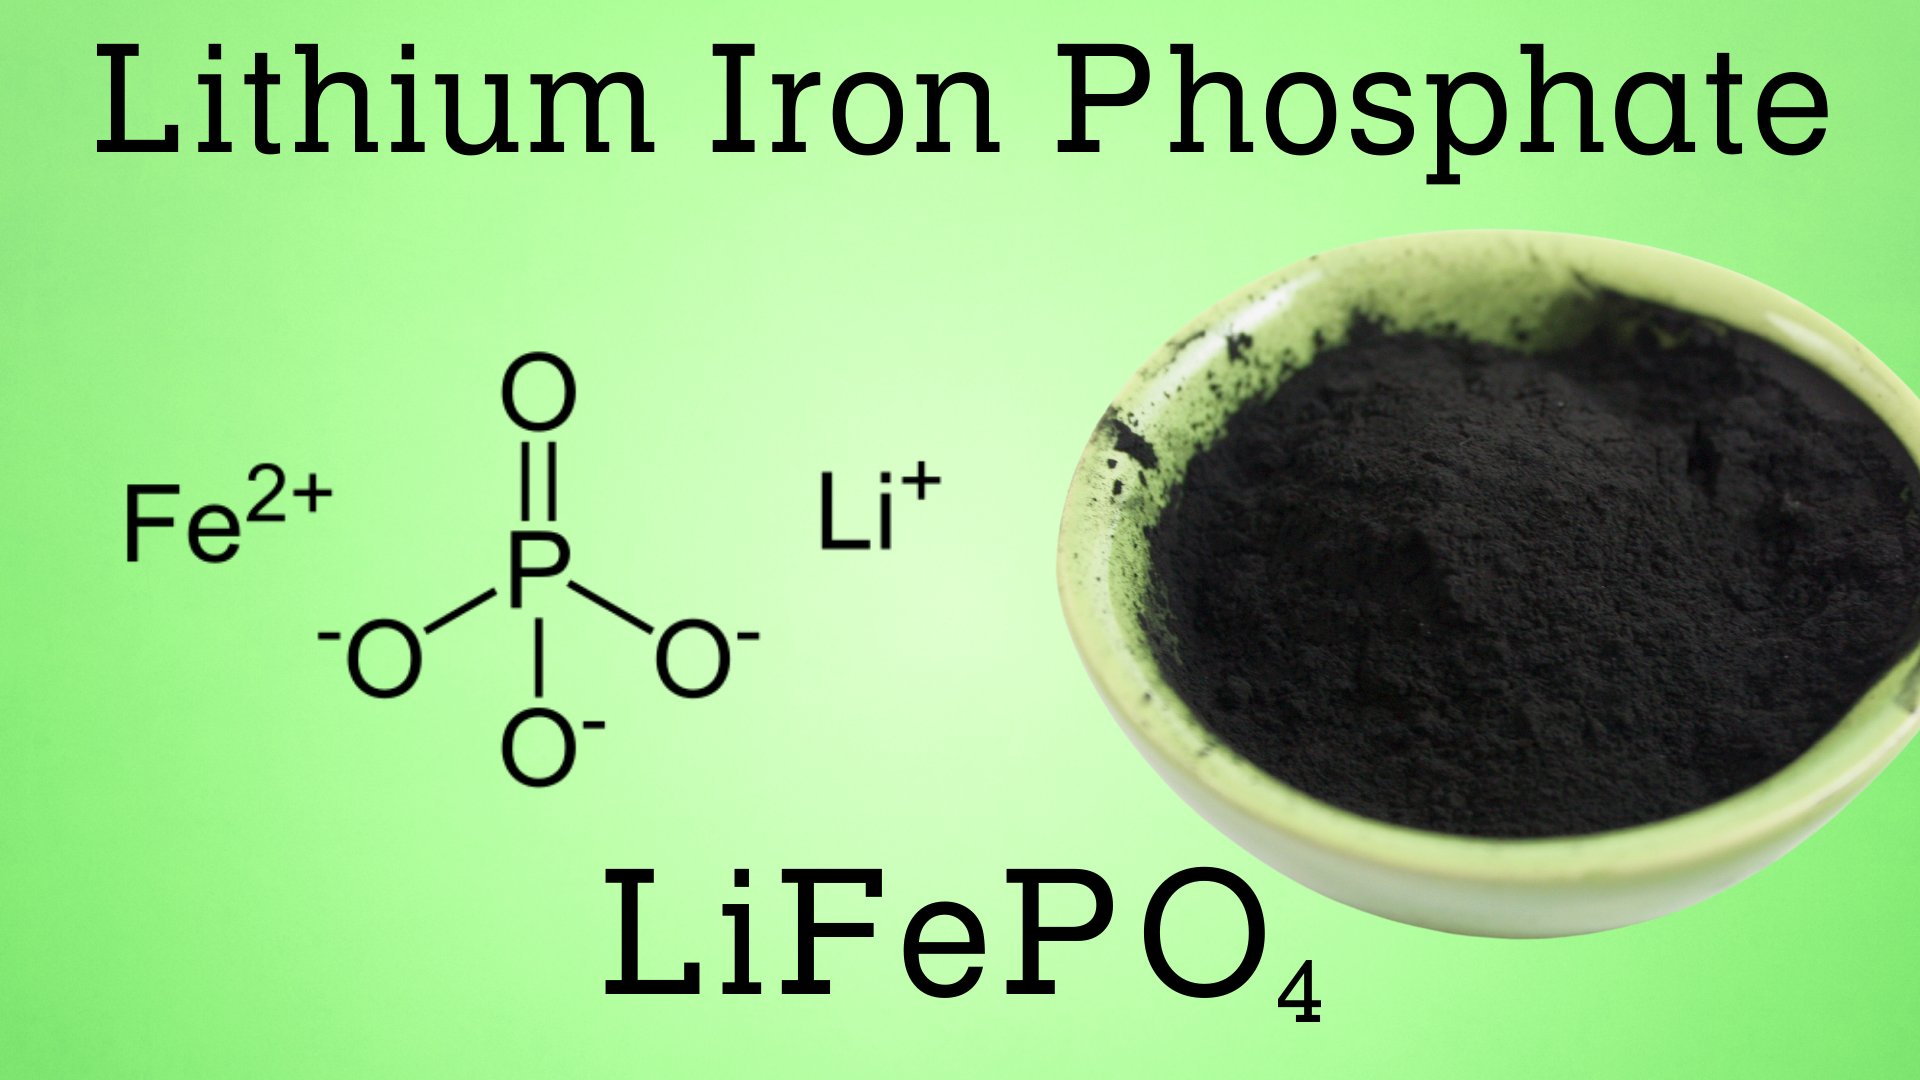 What Is Lithium Iron Phosphate?